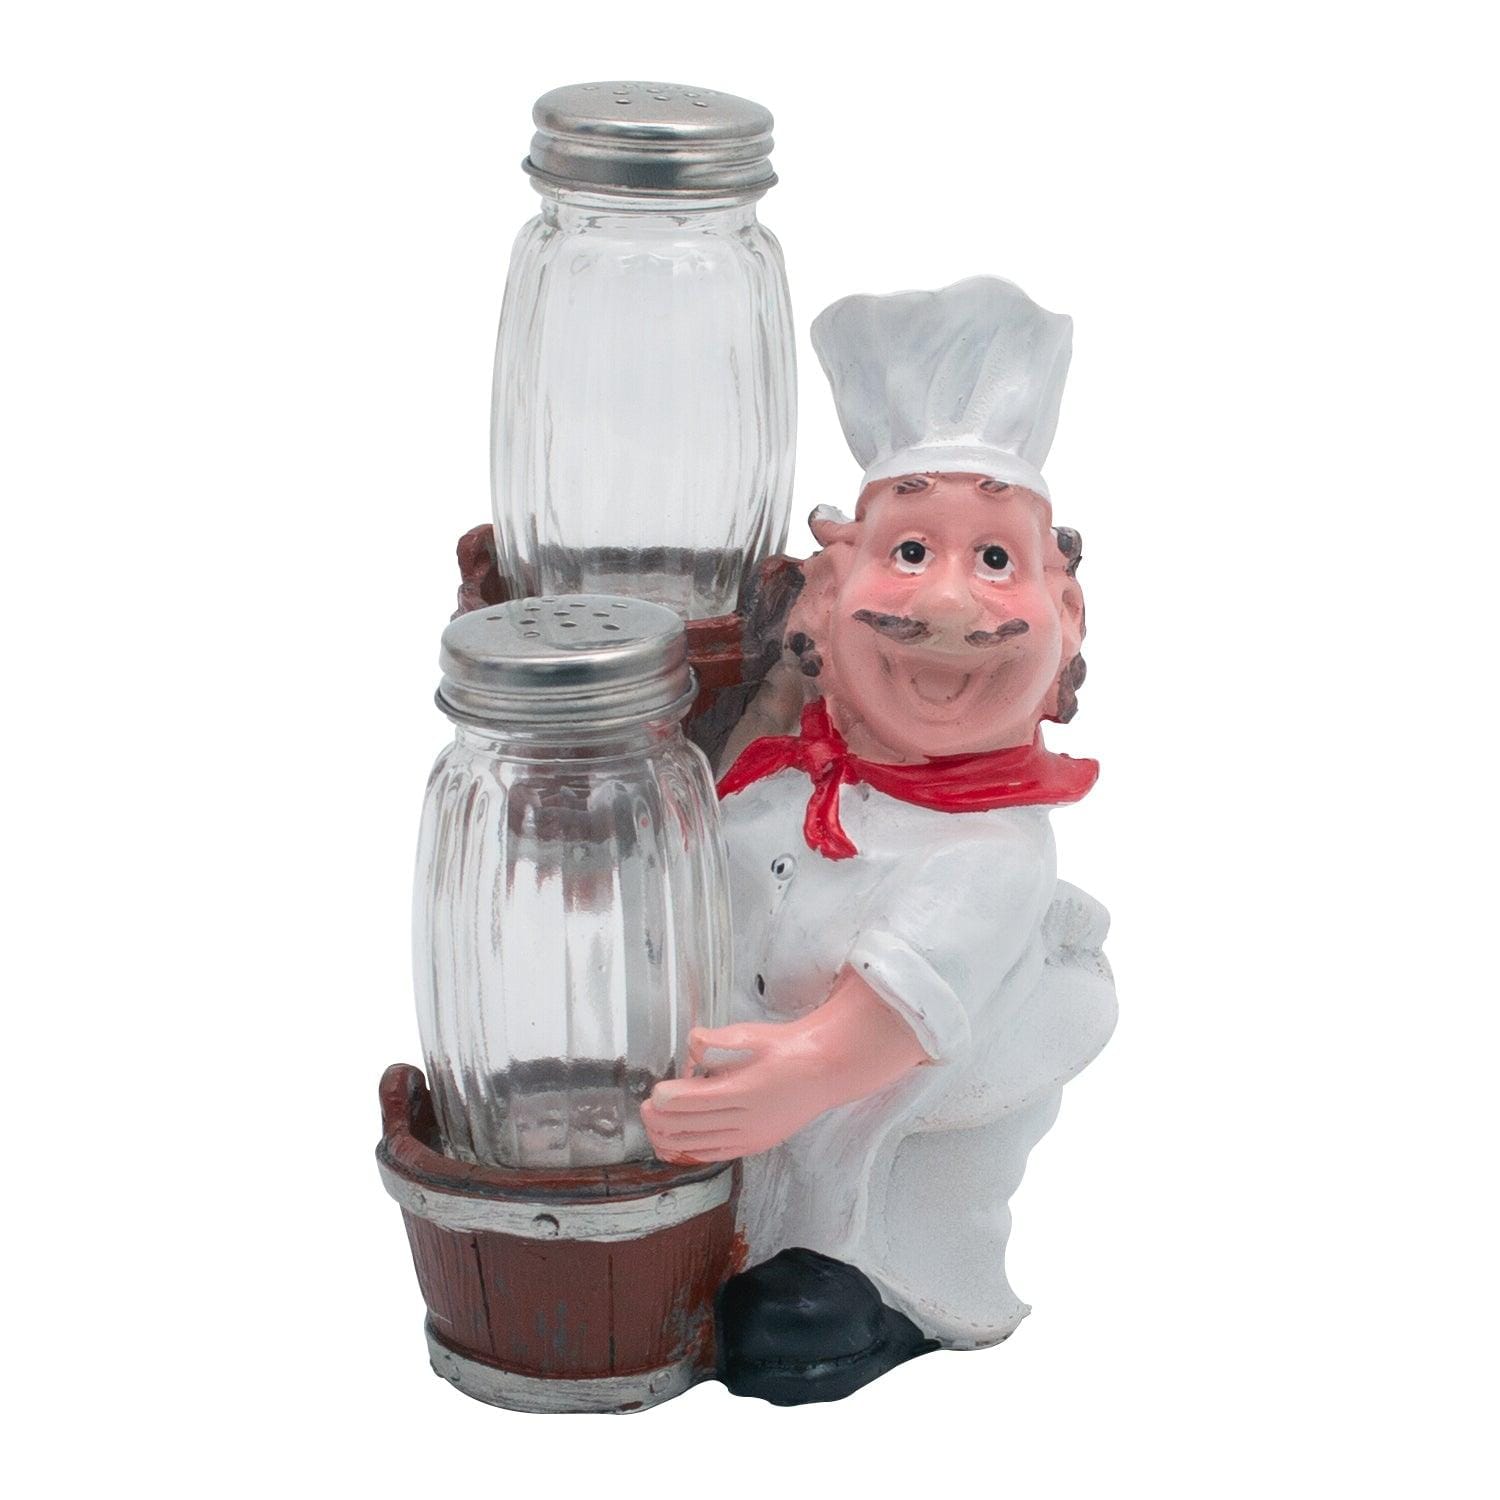 Foodie Chef Figurine Resin Salt & Pepper Shakers in Basket Holder Set (Left)